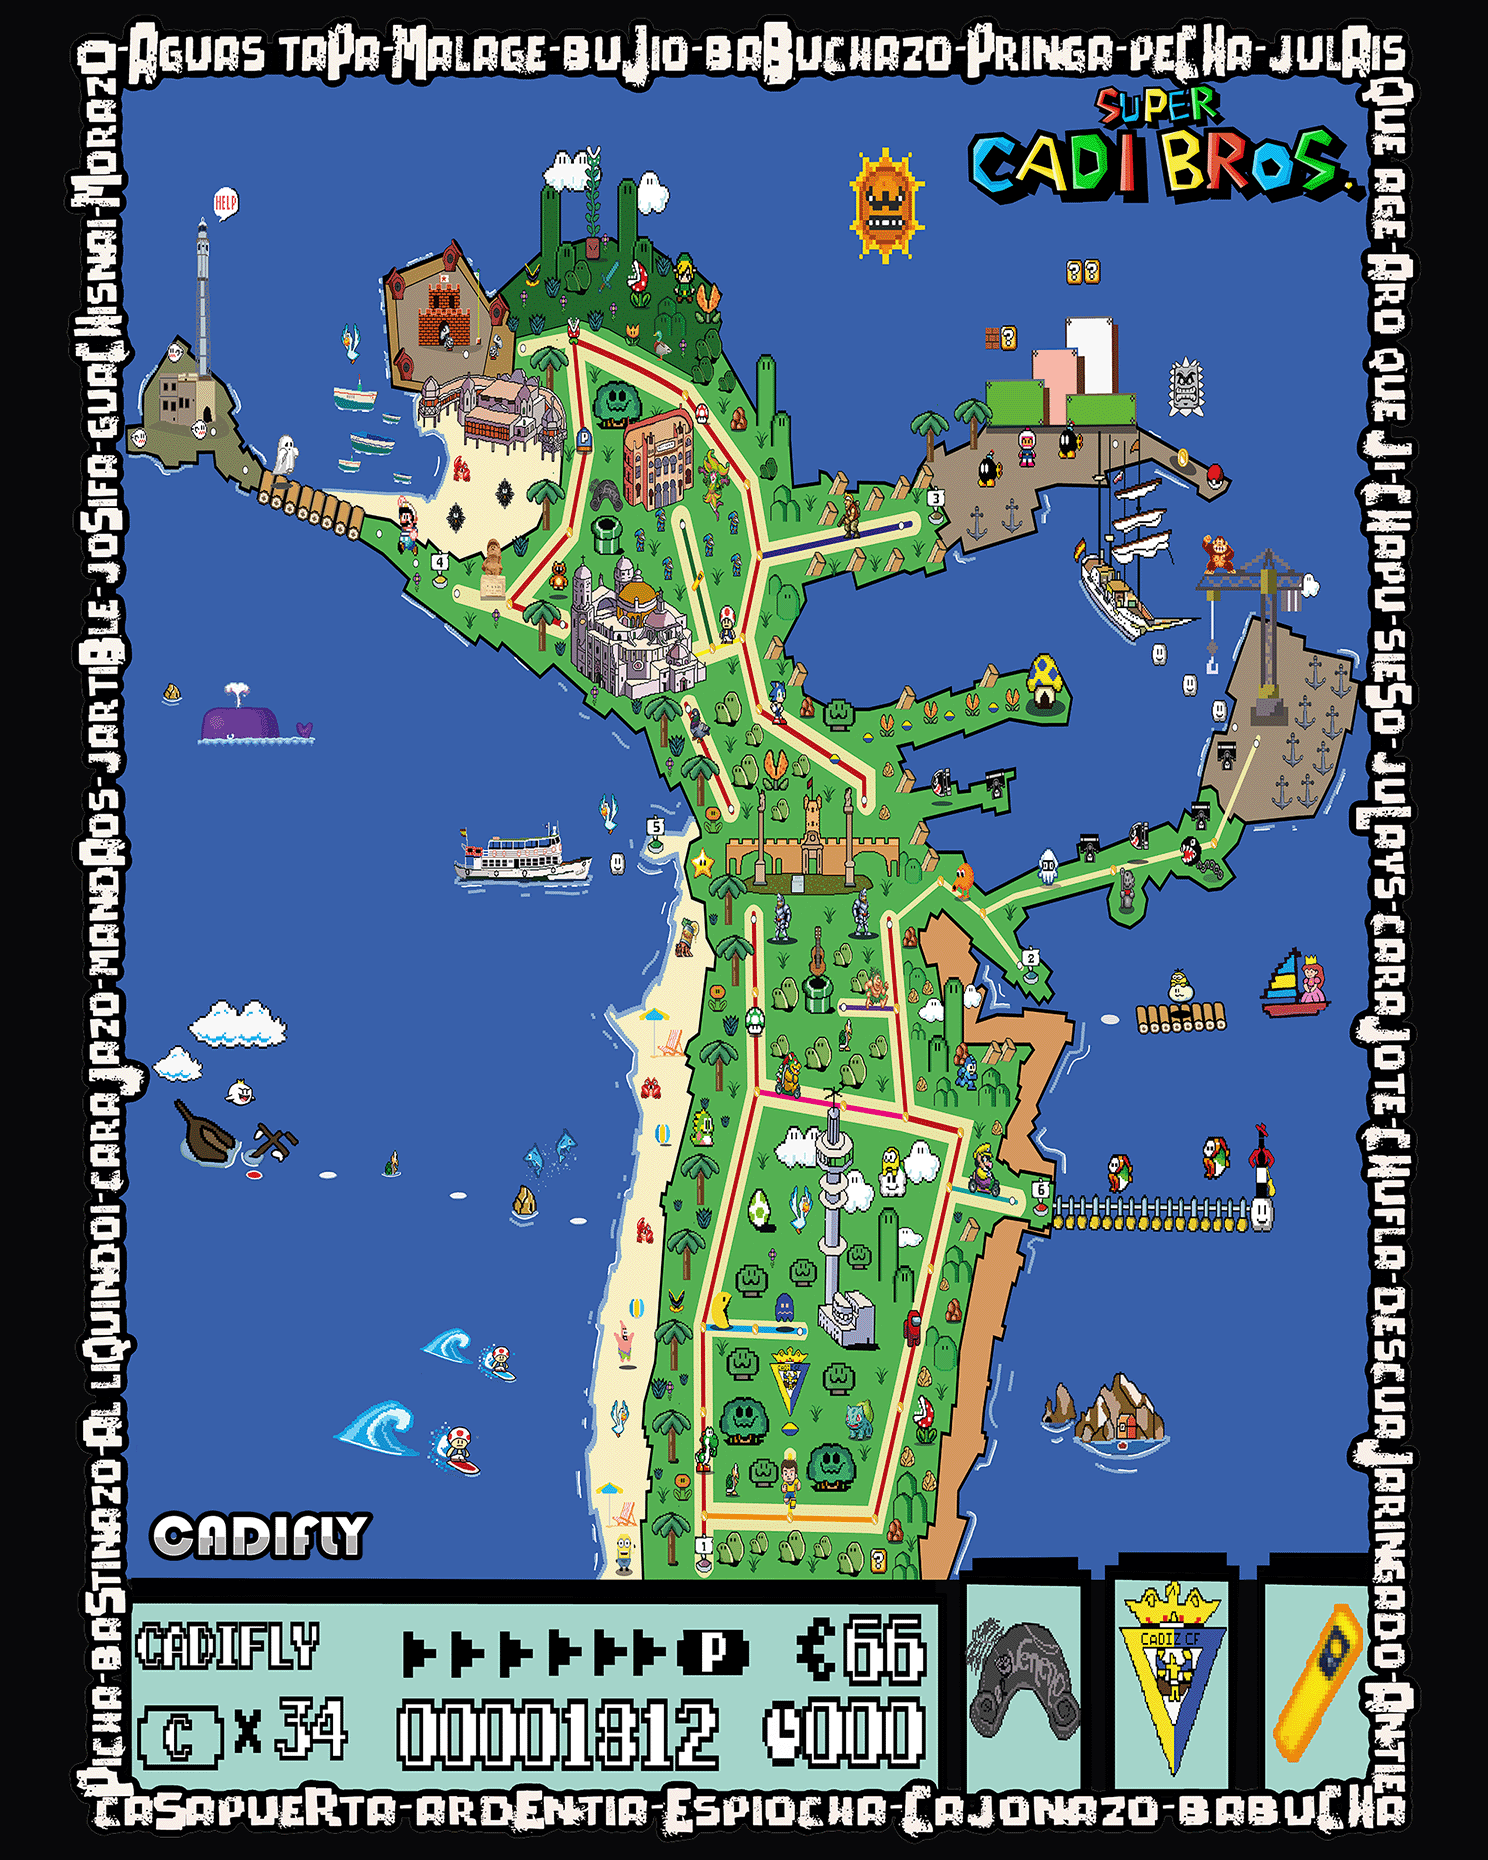 Mundo de Cádiz al estilo Mario Bros creado por cadifly